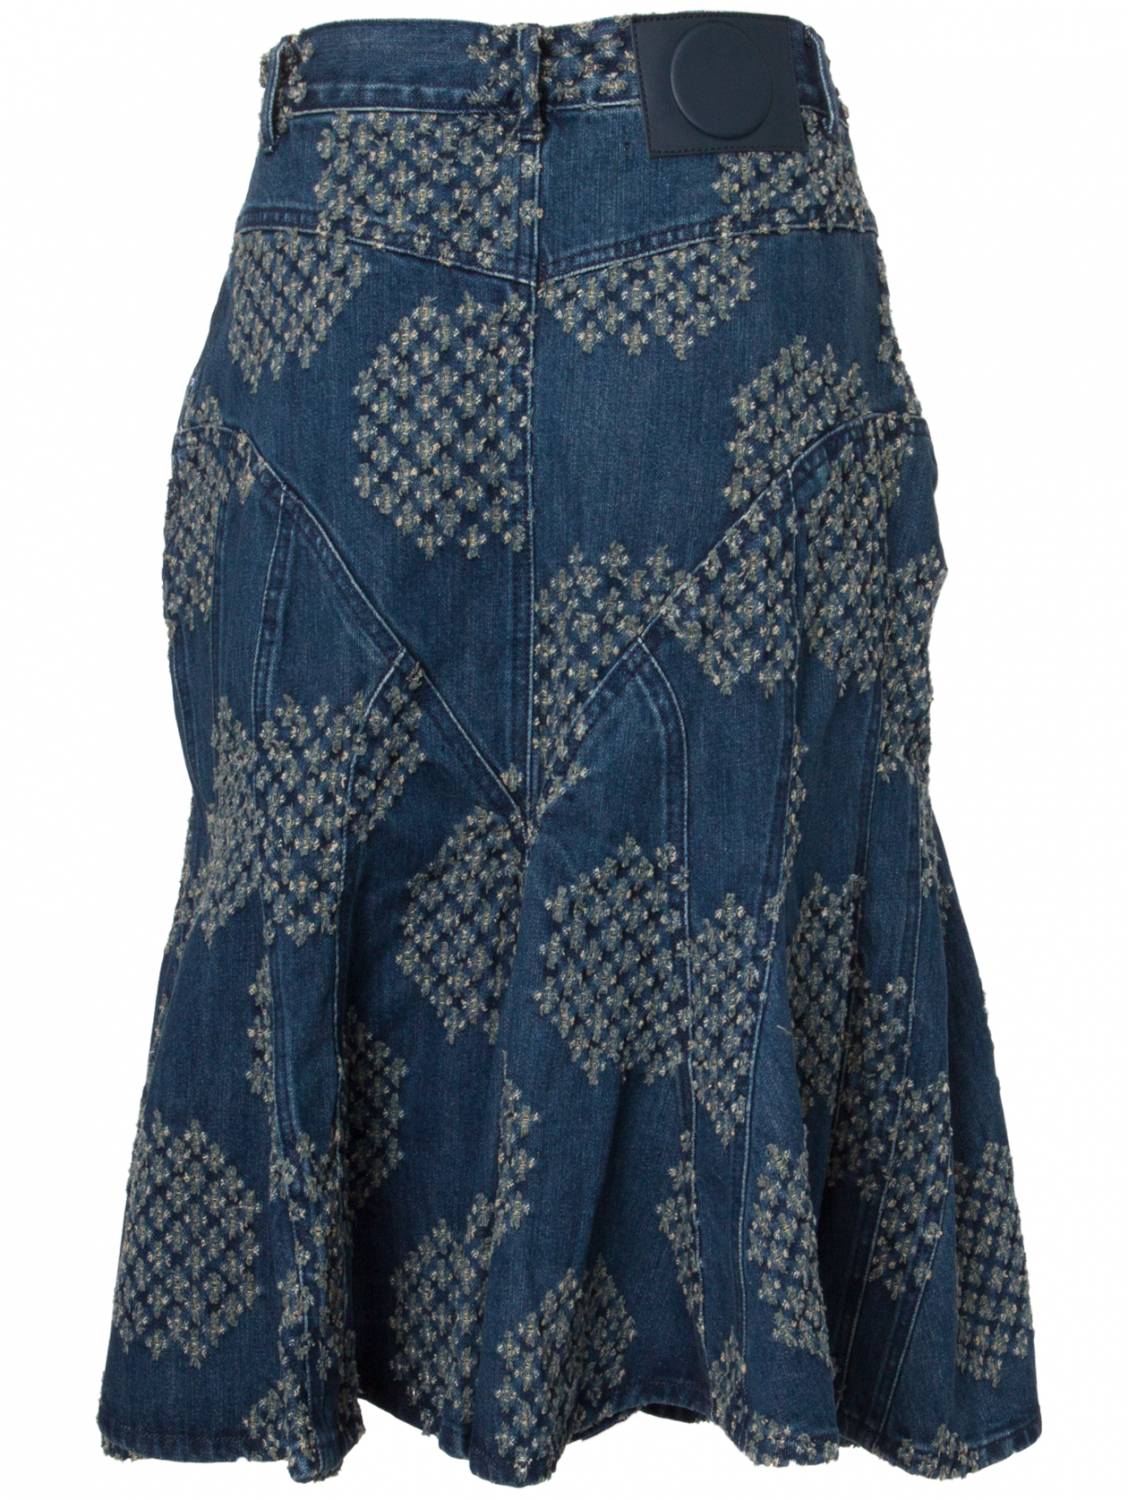 Denim Skirt Patterns 2